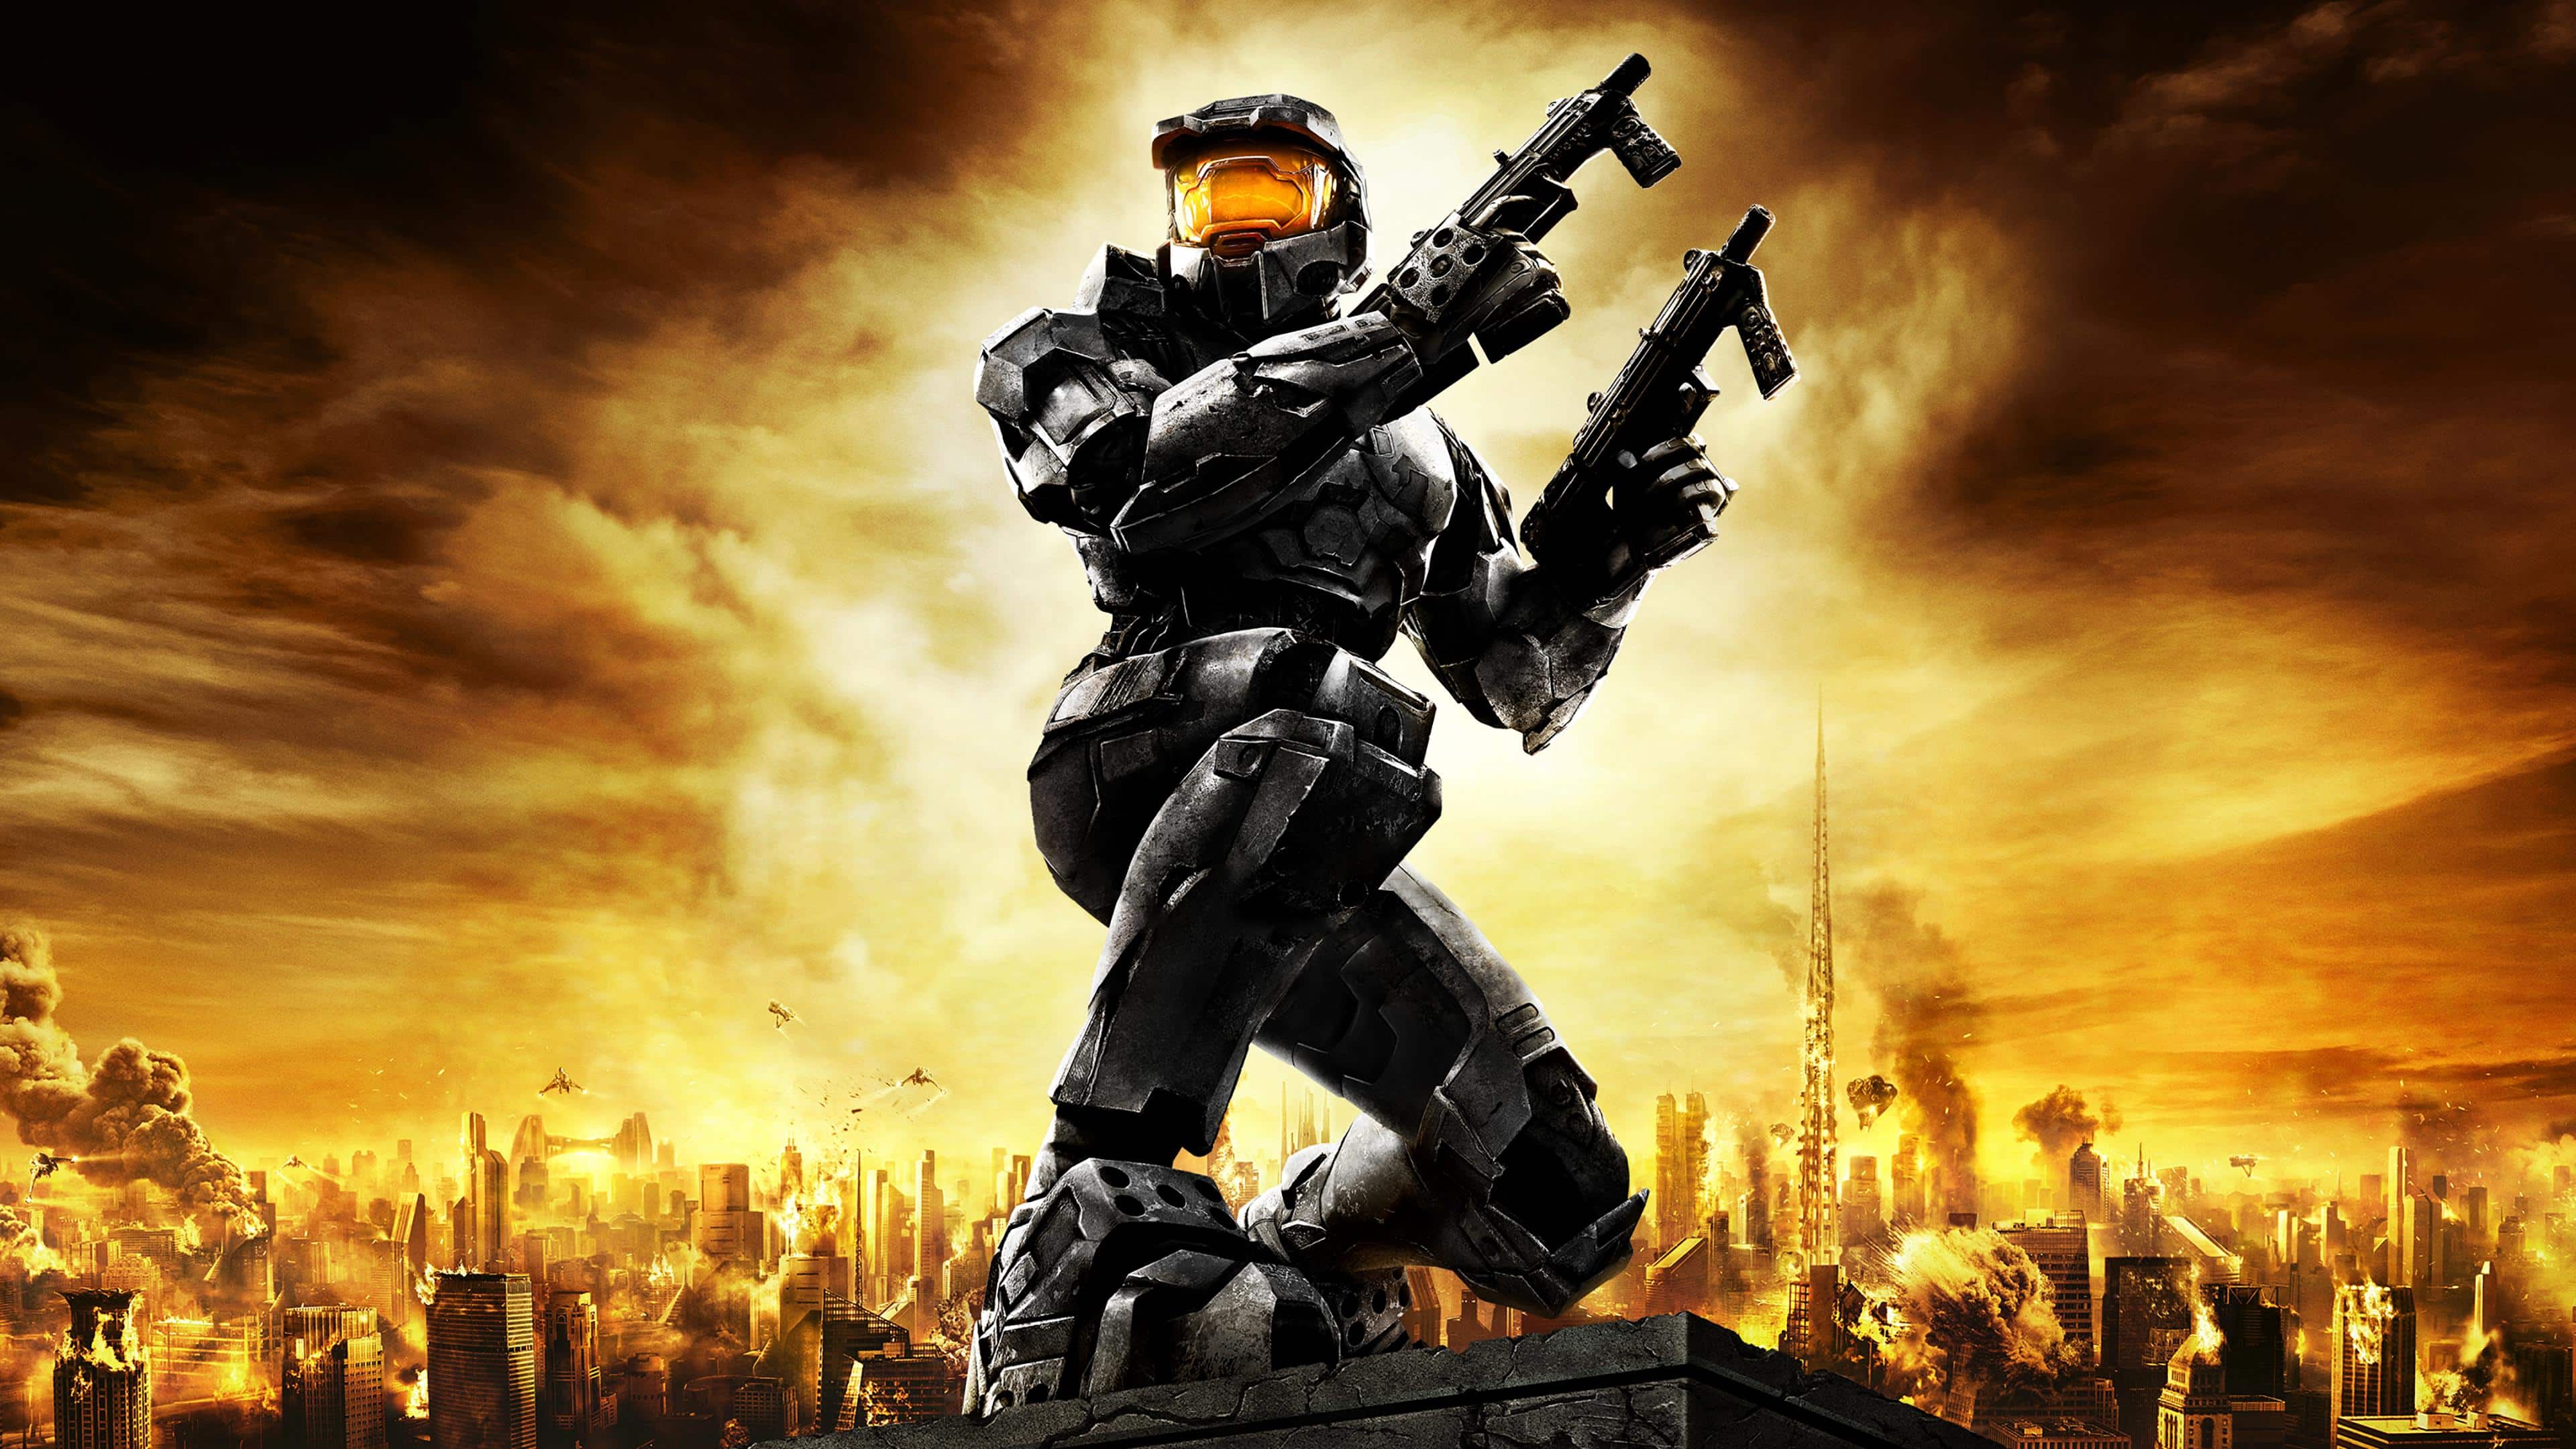 Halo 2 artwork